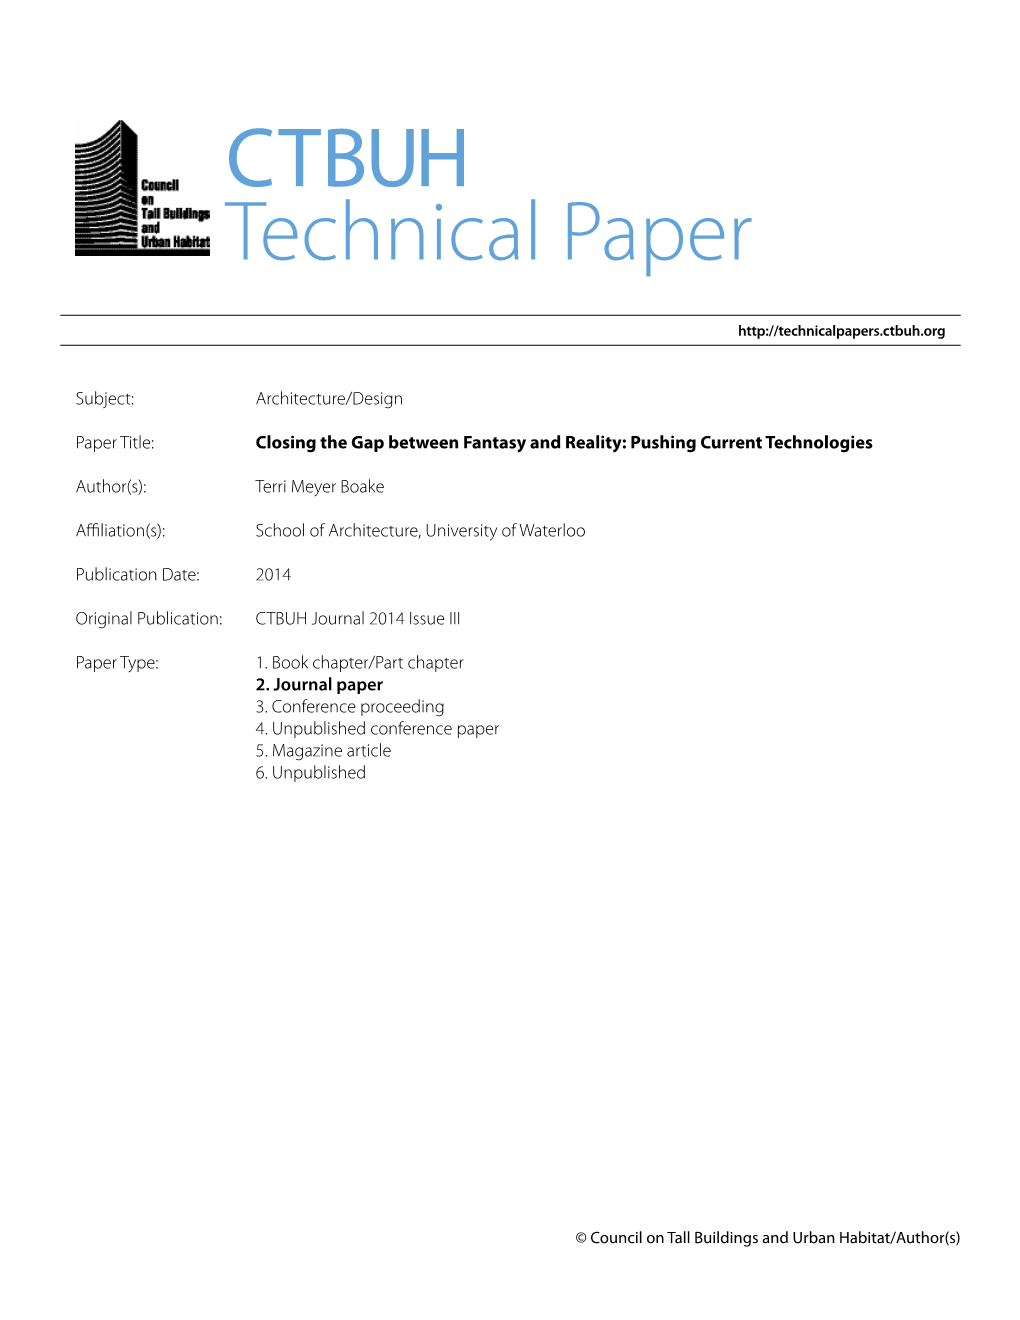 CTBUH Technical Paper